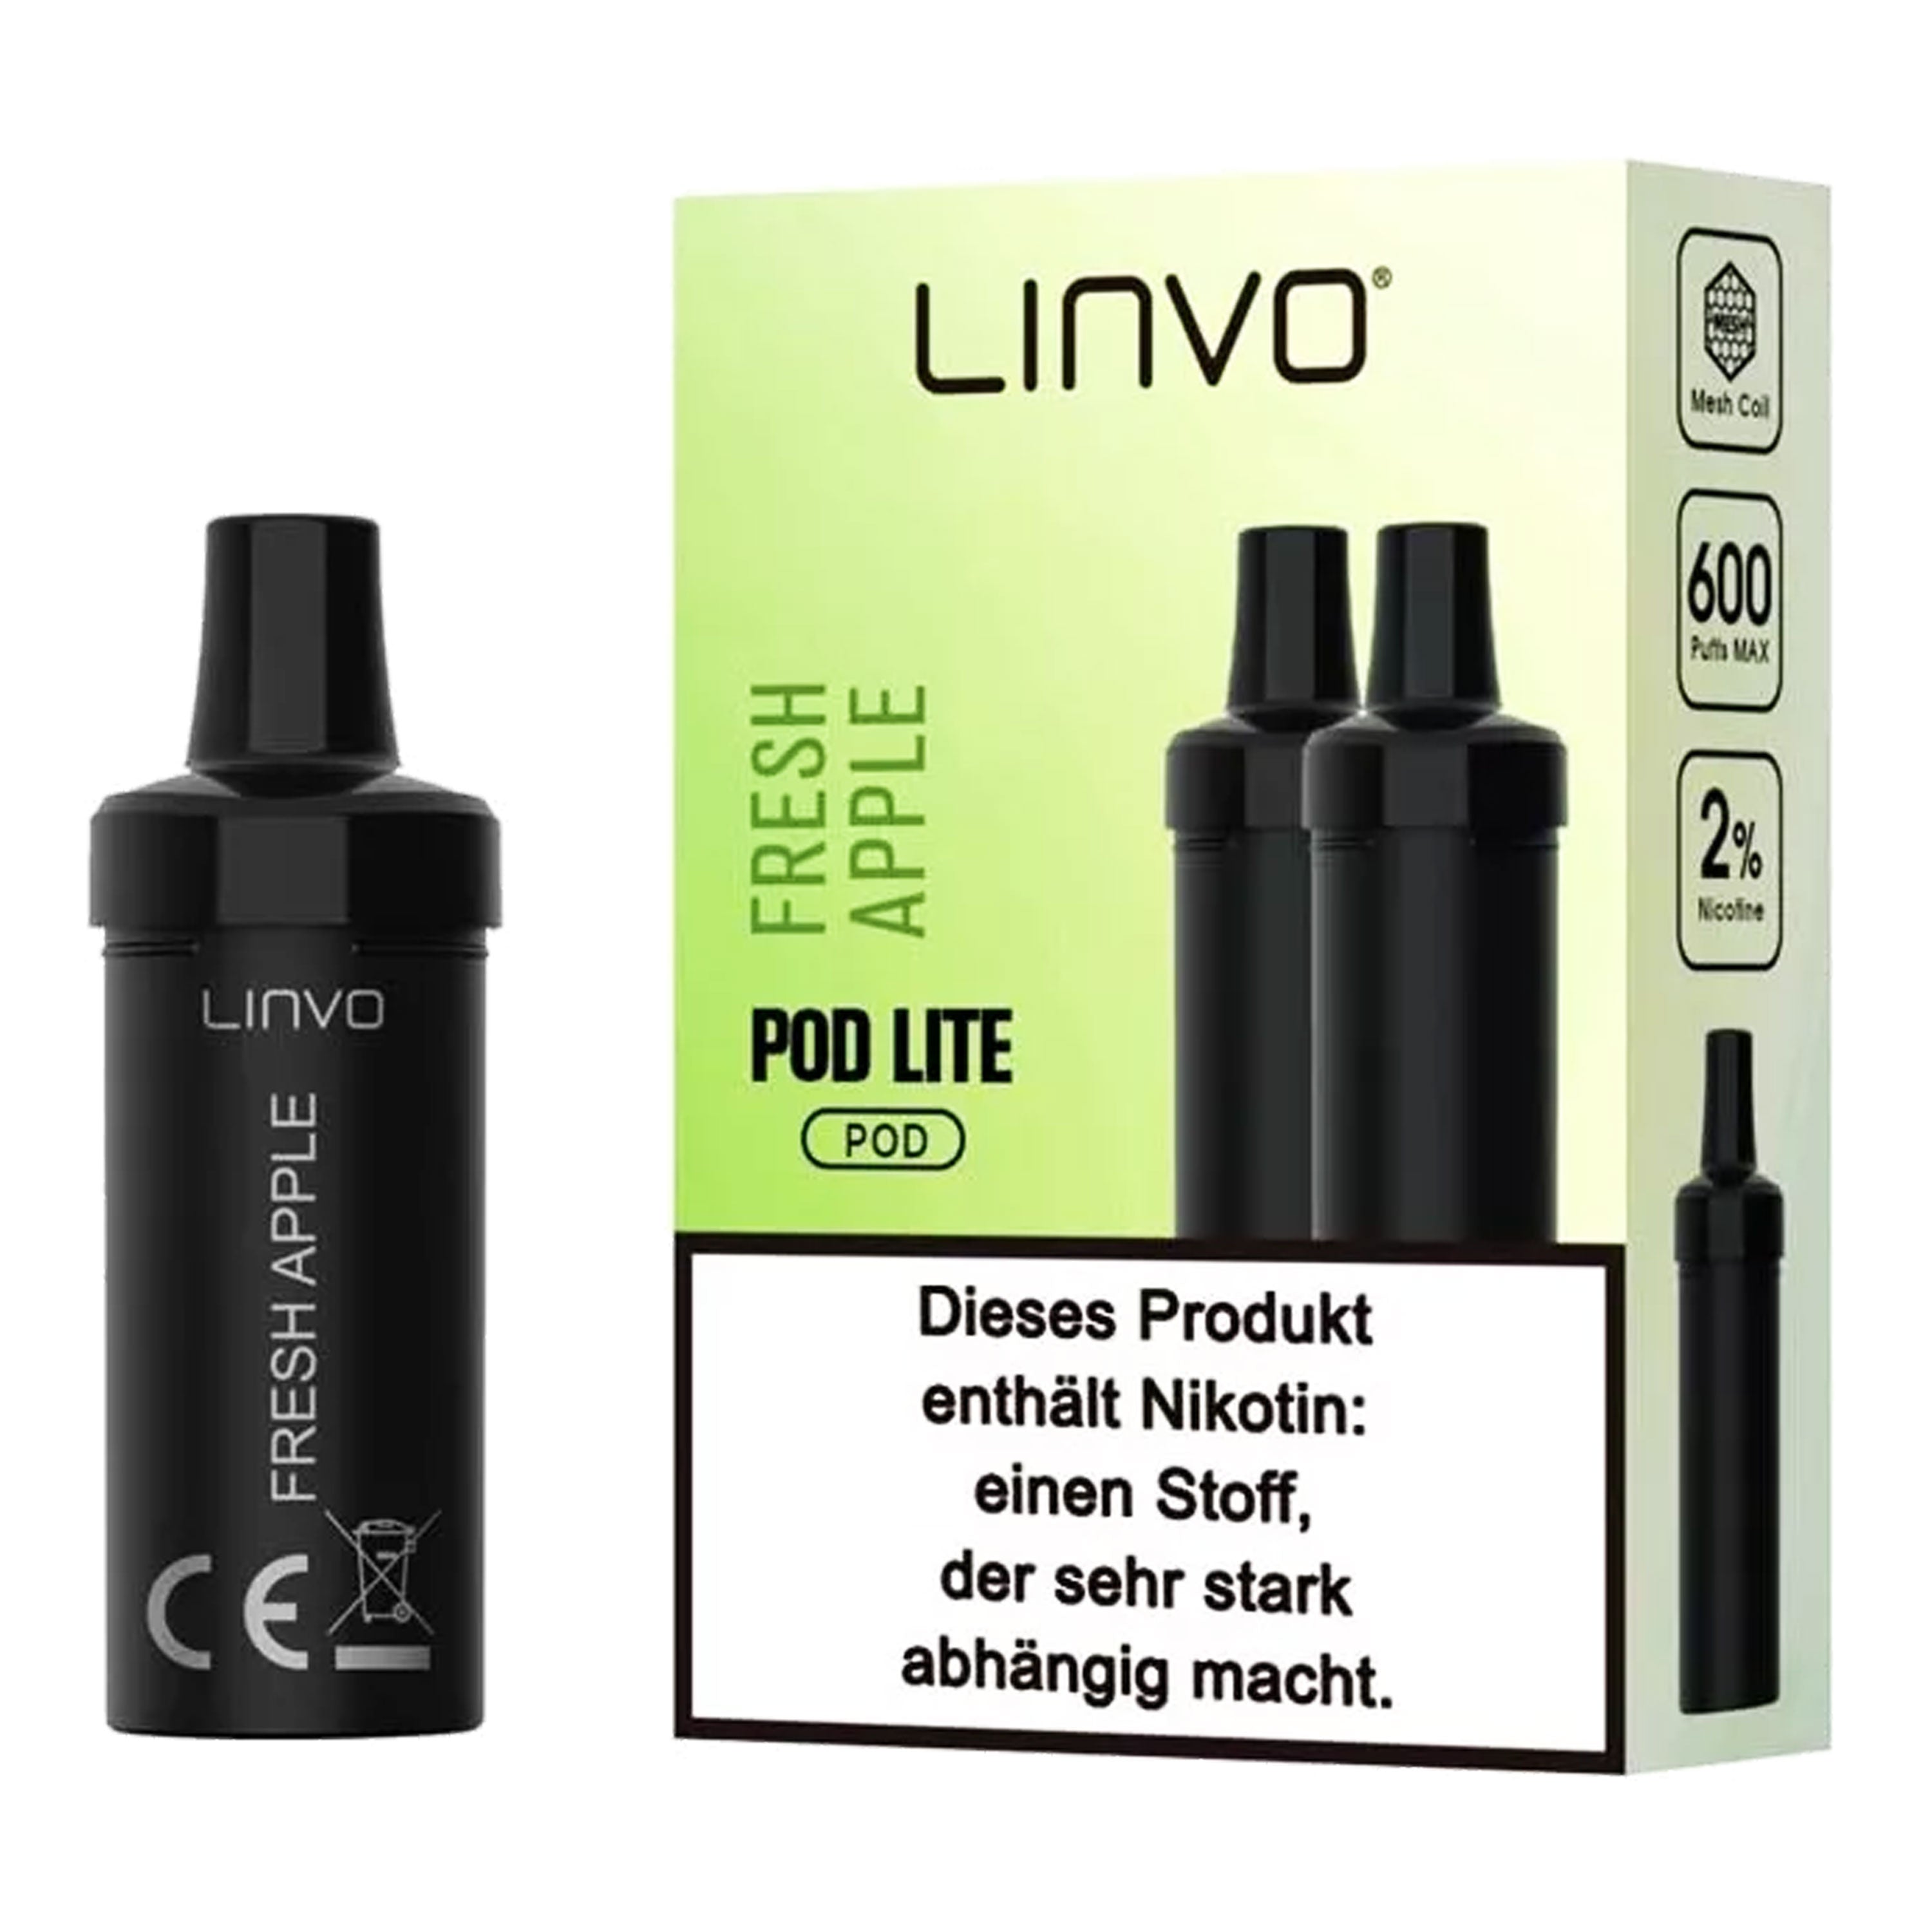 Linvo  - Pod Lite - Fresh Apple (2 x 2 ml) - Pod (2 Stück)